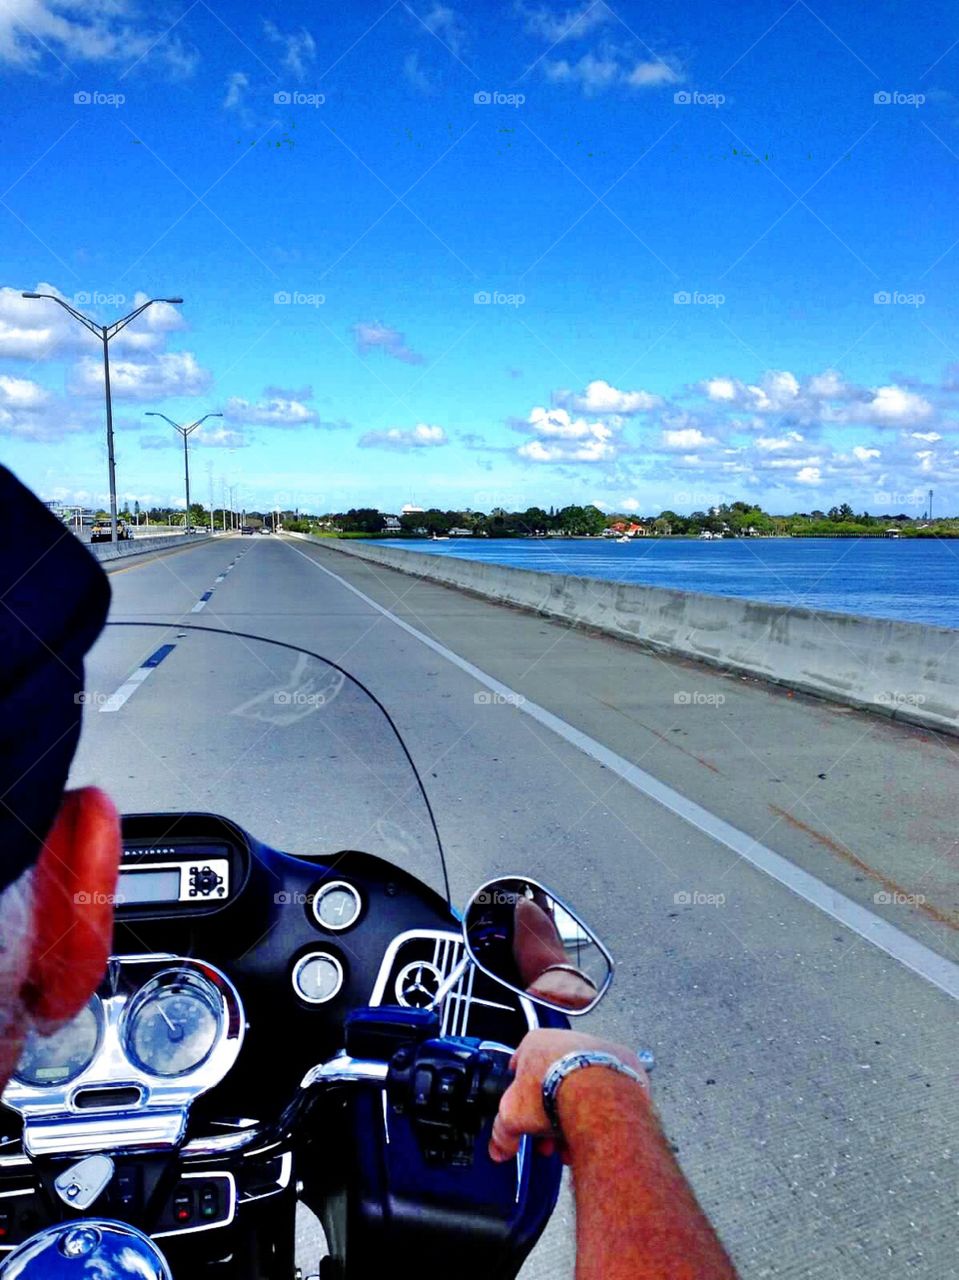 Harley Davidson drive over bridge 